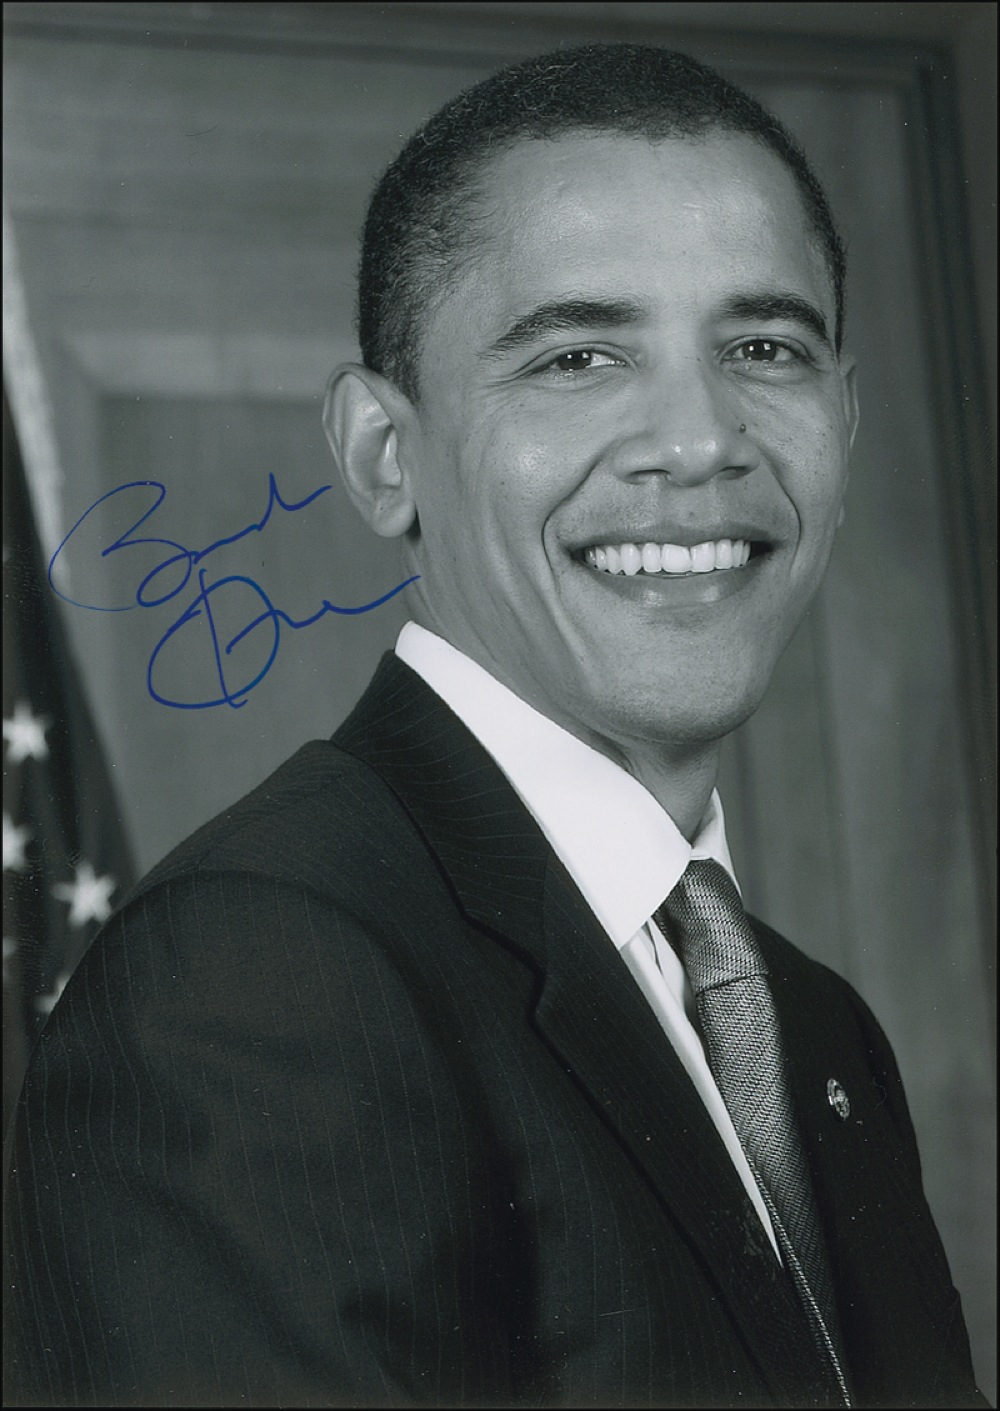 Lot #97 Barack Obama